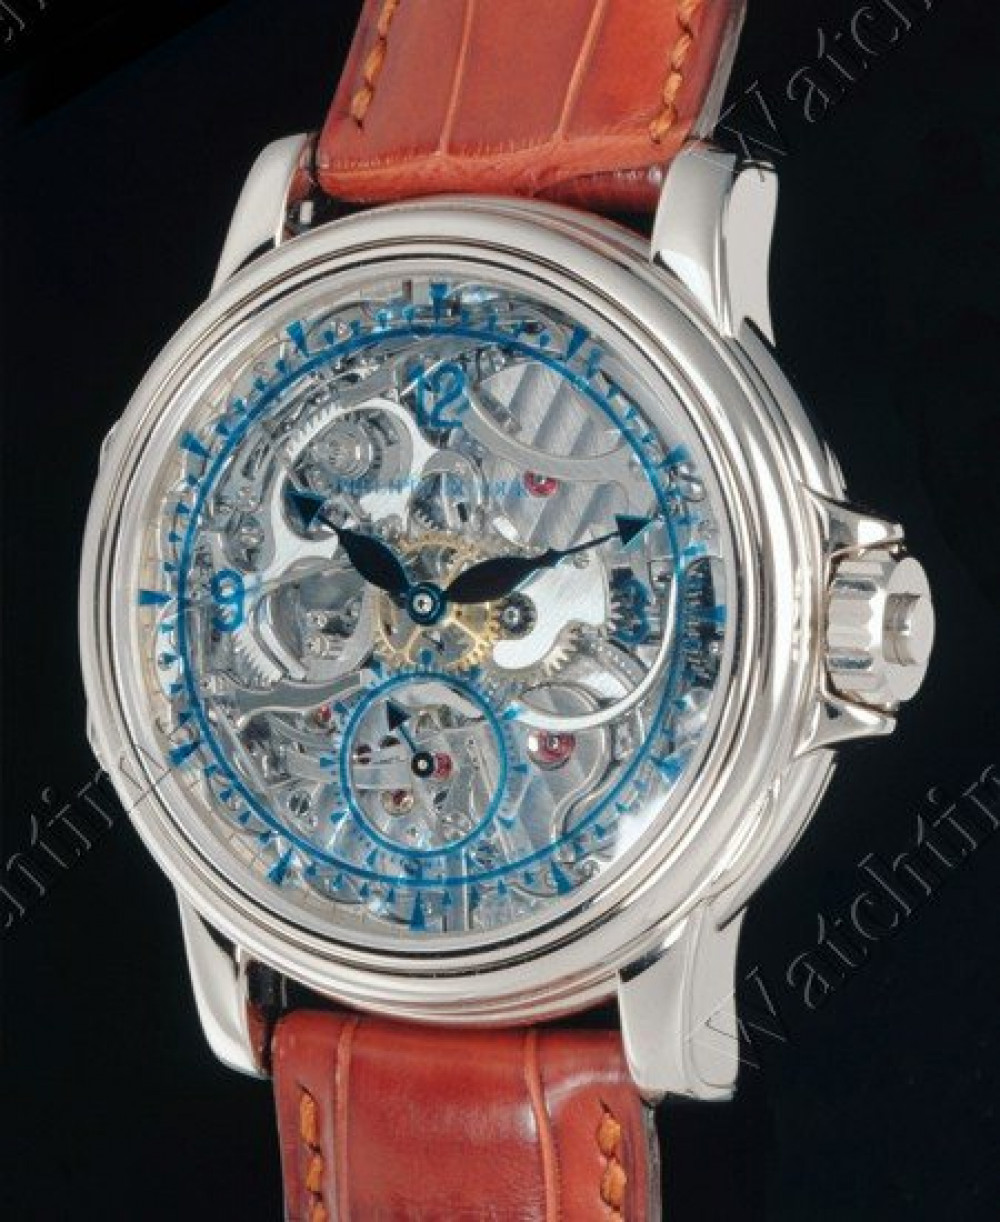 Zegarek firmy Philippe Dufour, model Grande et Petite Sonnerie